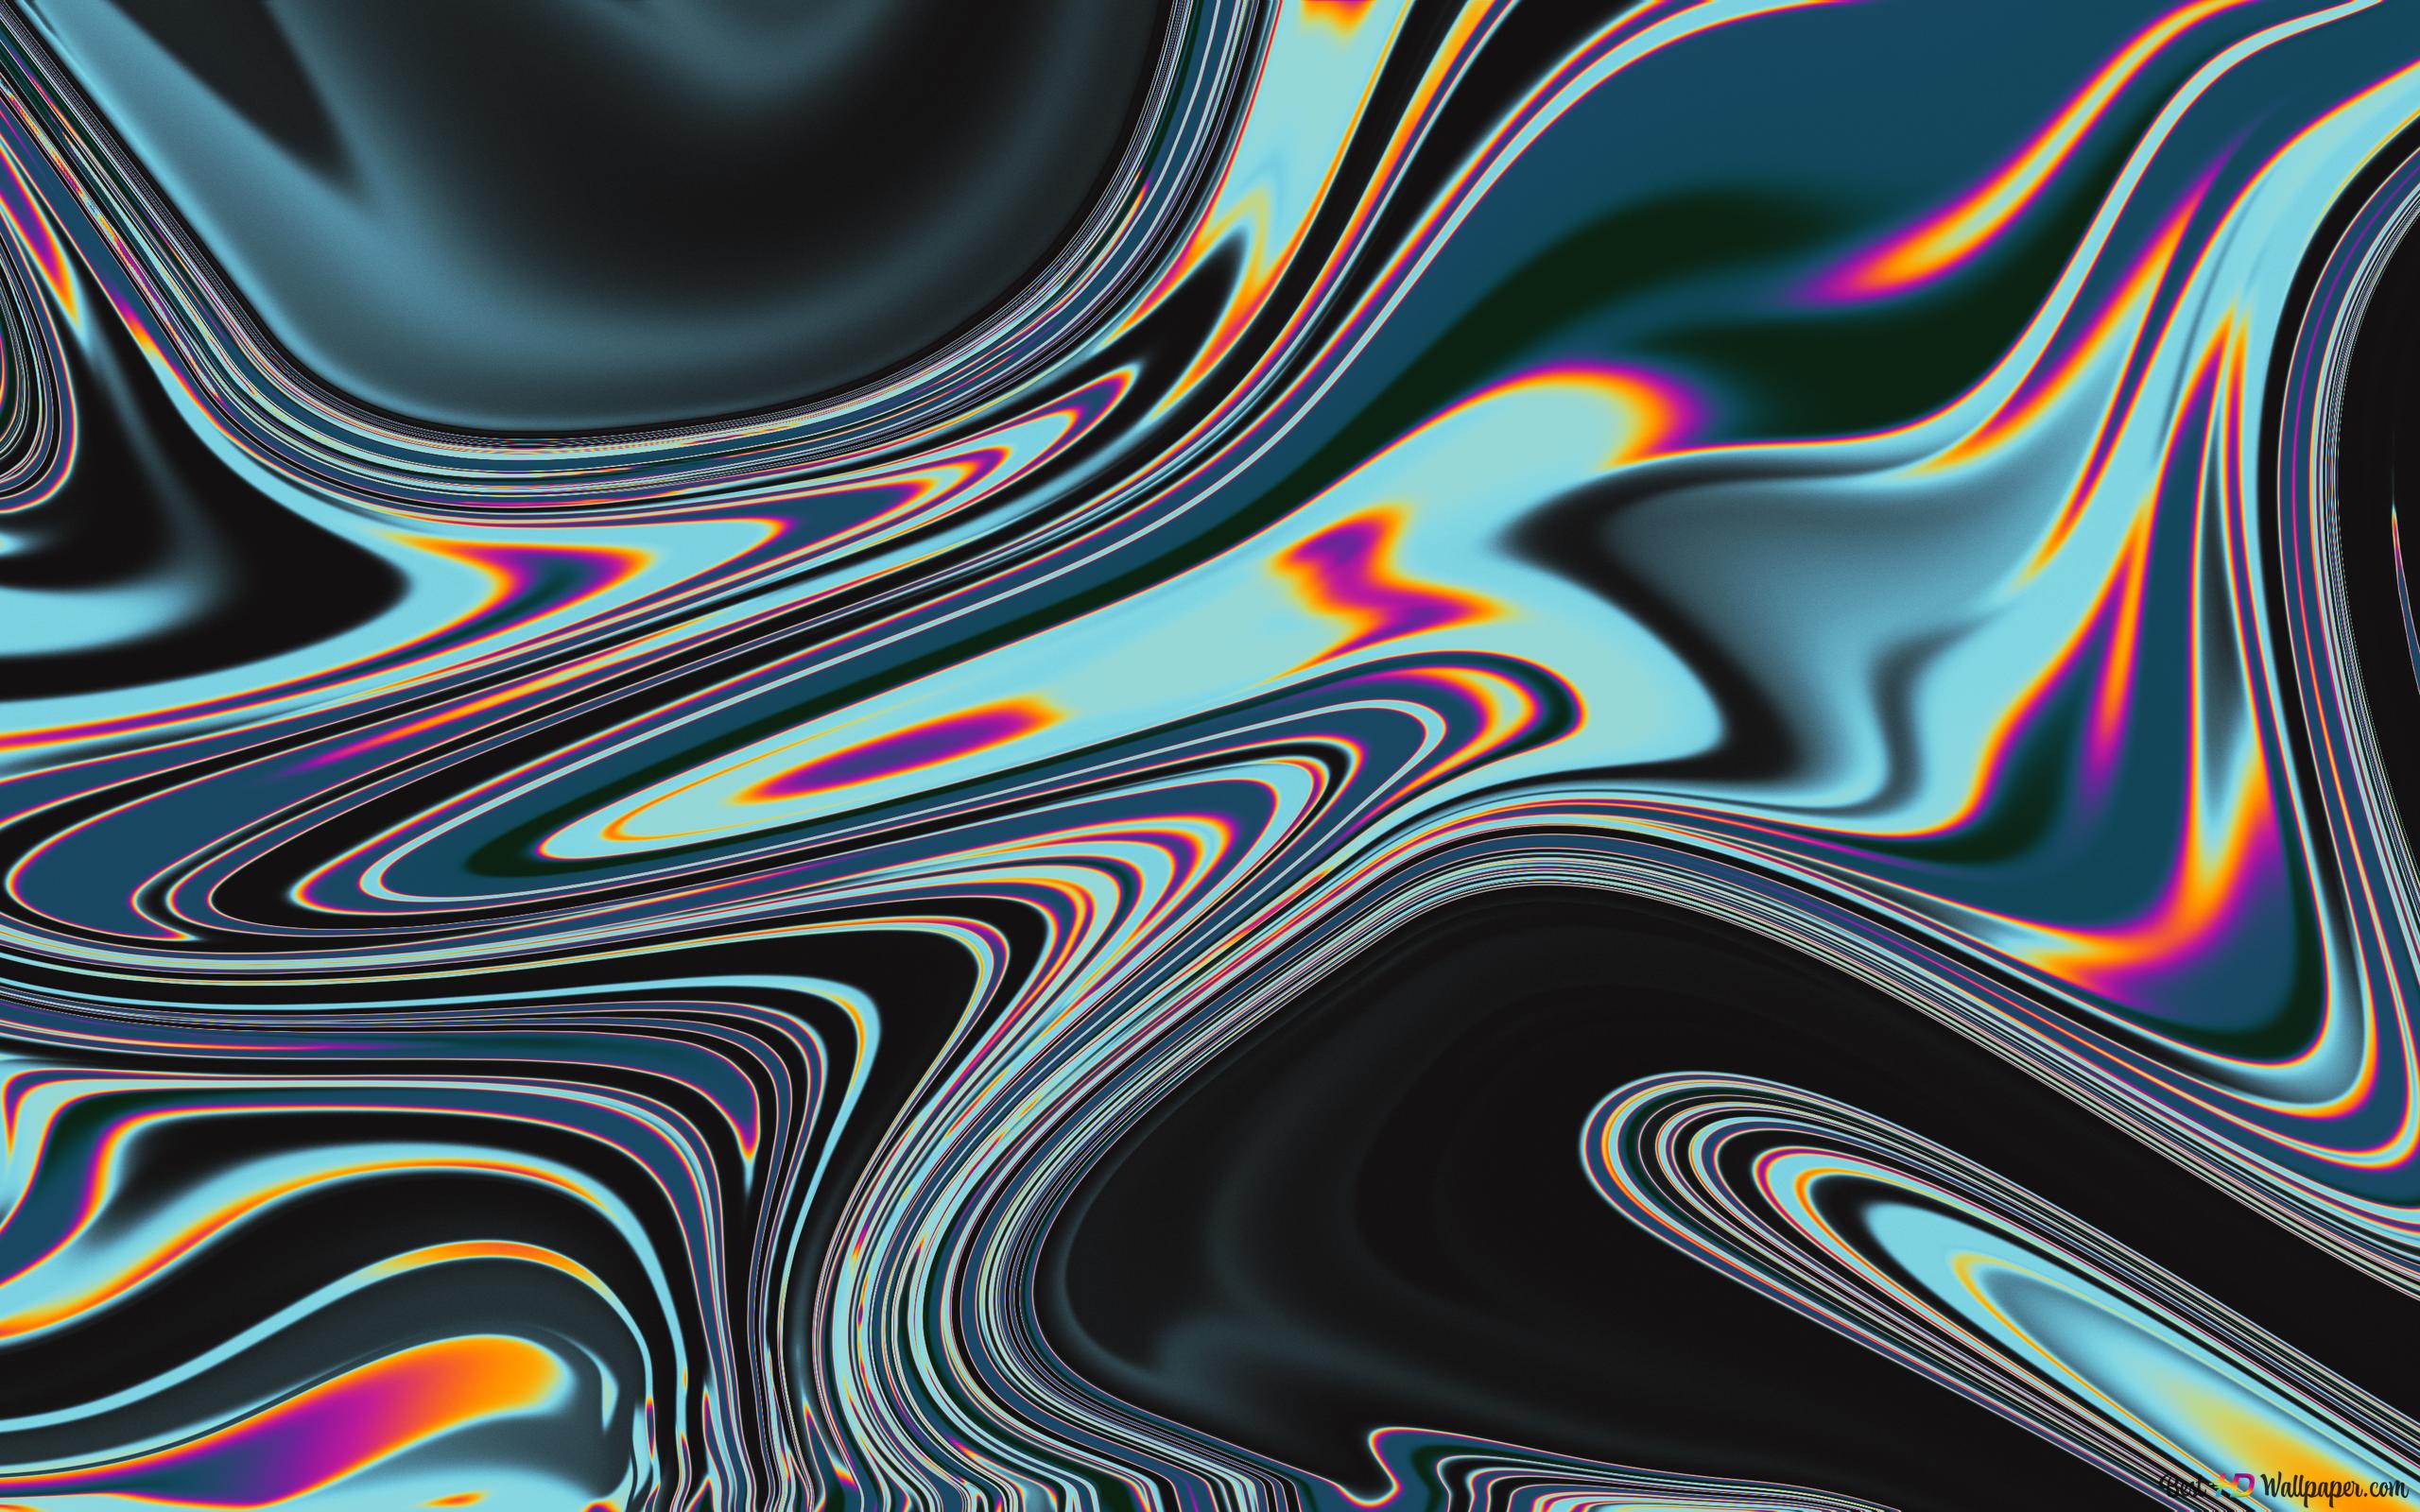  Psychedelisch Hintergrundbild 2560x1600. Digital art, abstract, colorful, liquid, modern covers psychedelic background aesthetic 4K wallpaper download